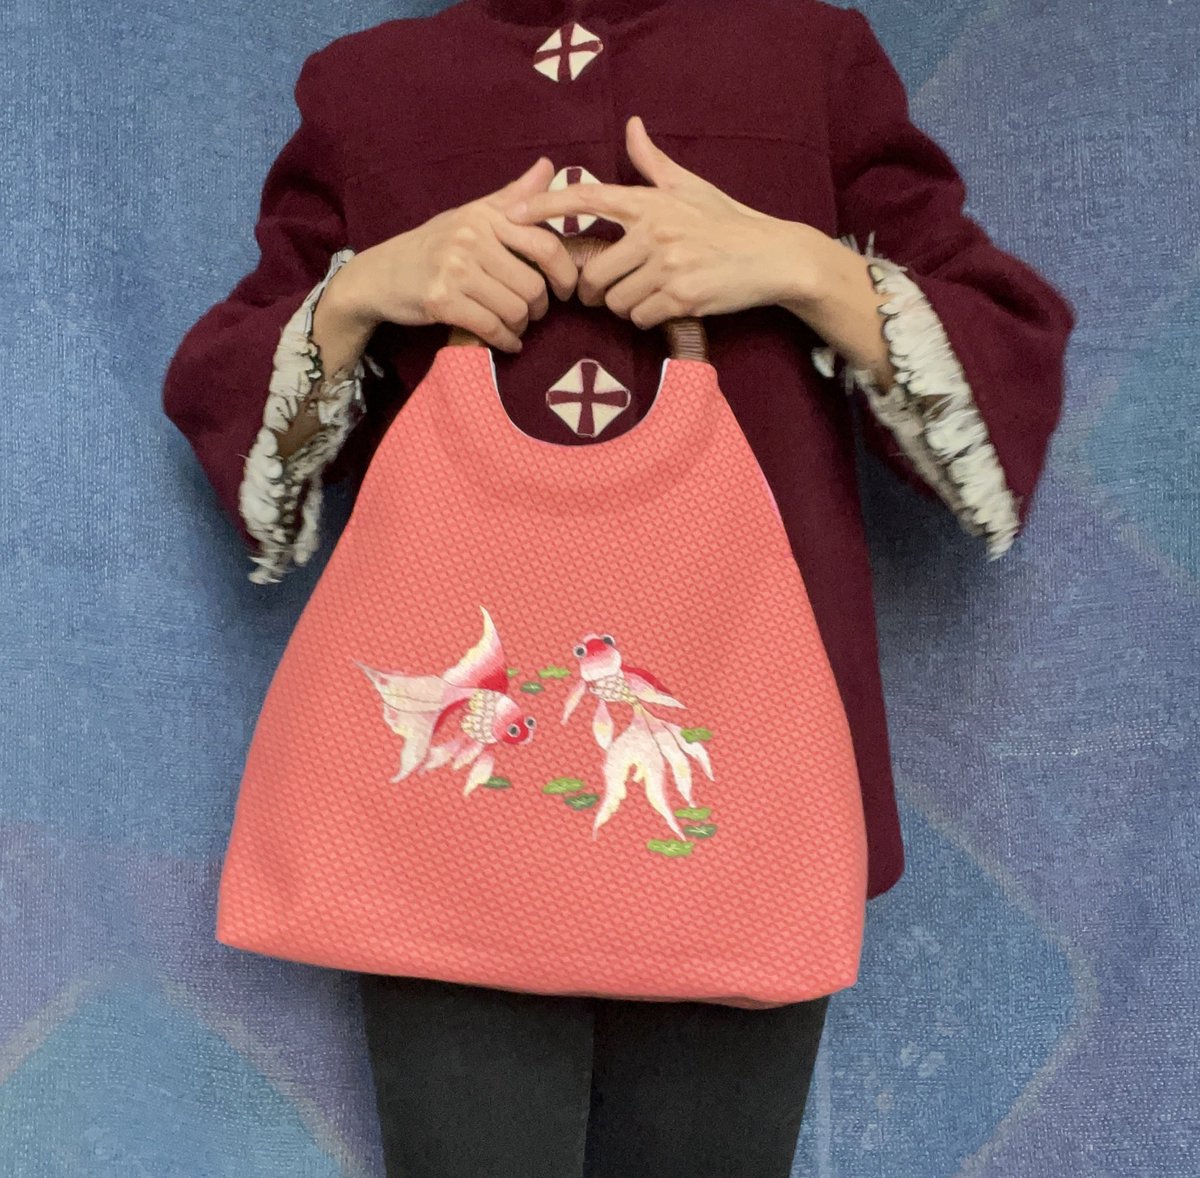 Little goldfish handle bag from Suzhou Cobblers.

#suzhoucobblersbag #littlegoldfish #handstitchedembroidery #needlepainting #modernembroidery #刺绣品 #needlecrafts #ideabag #timelessdesign #年年有餘